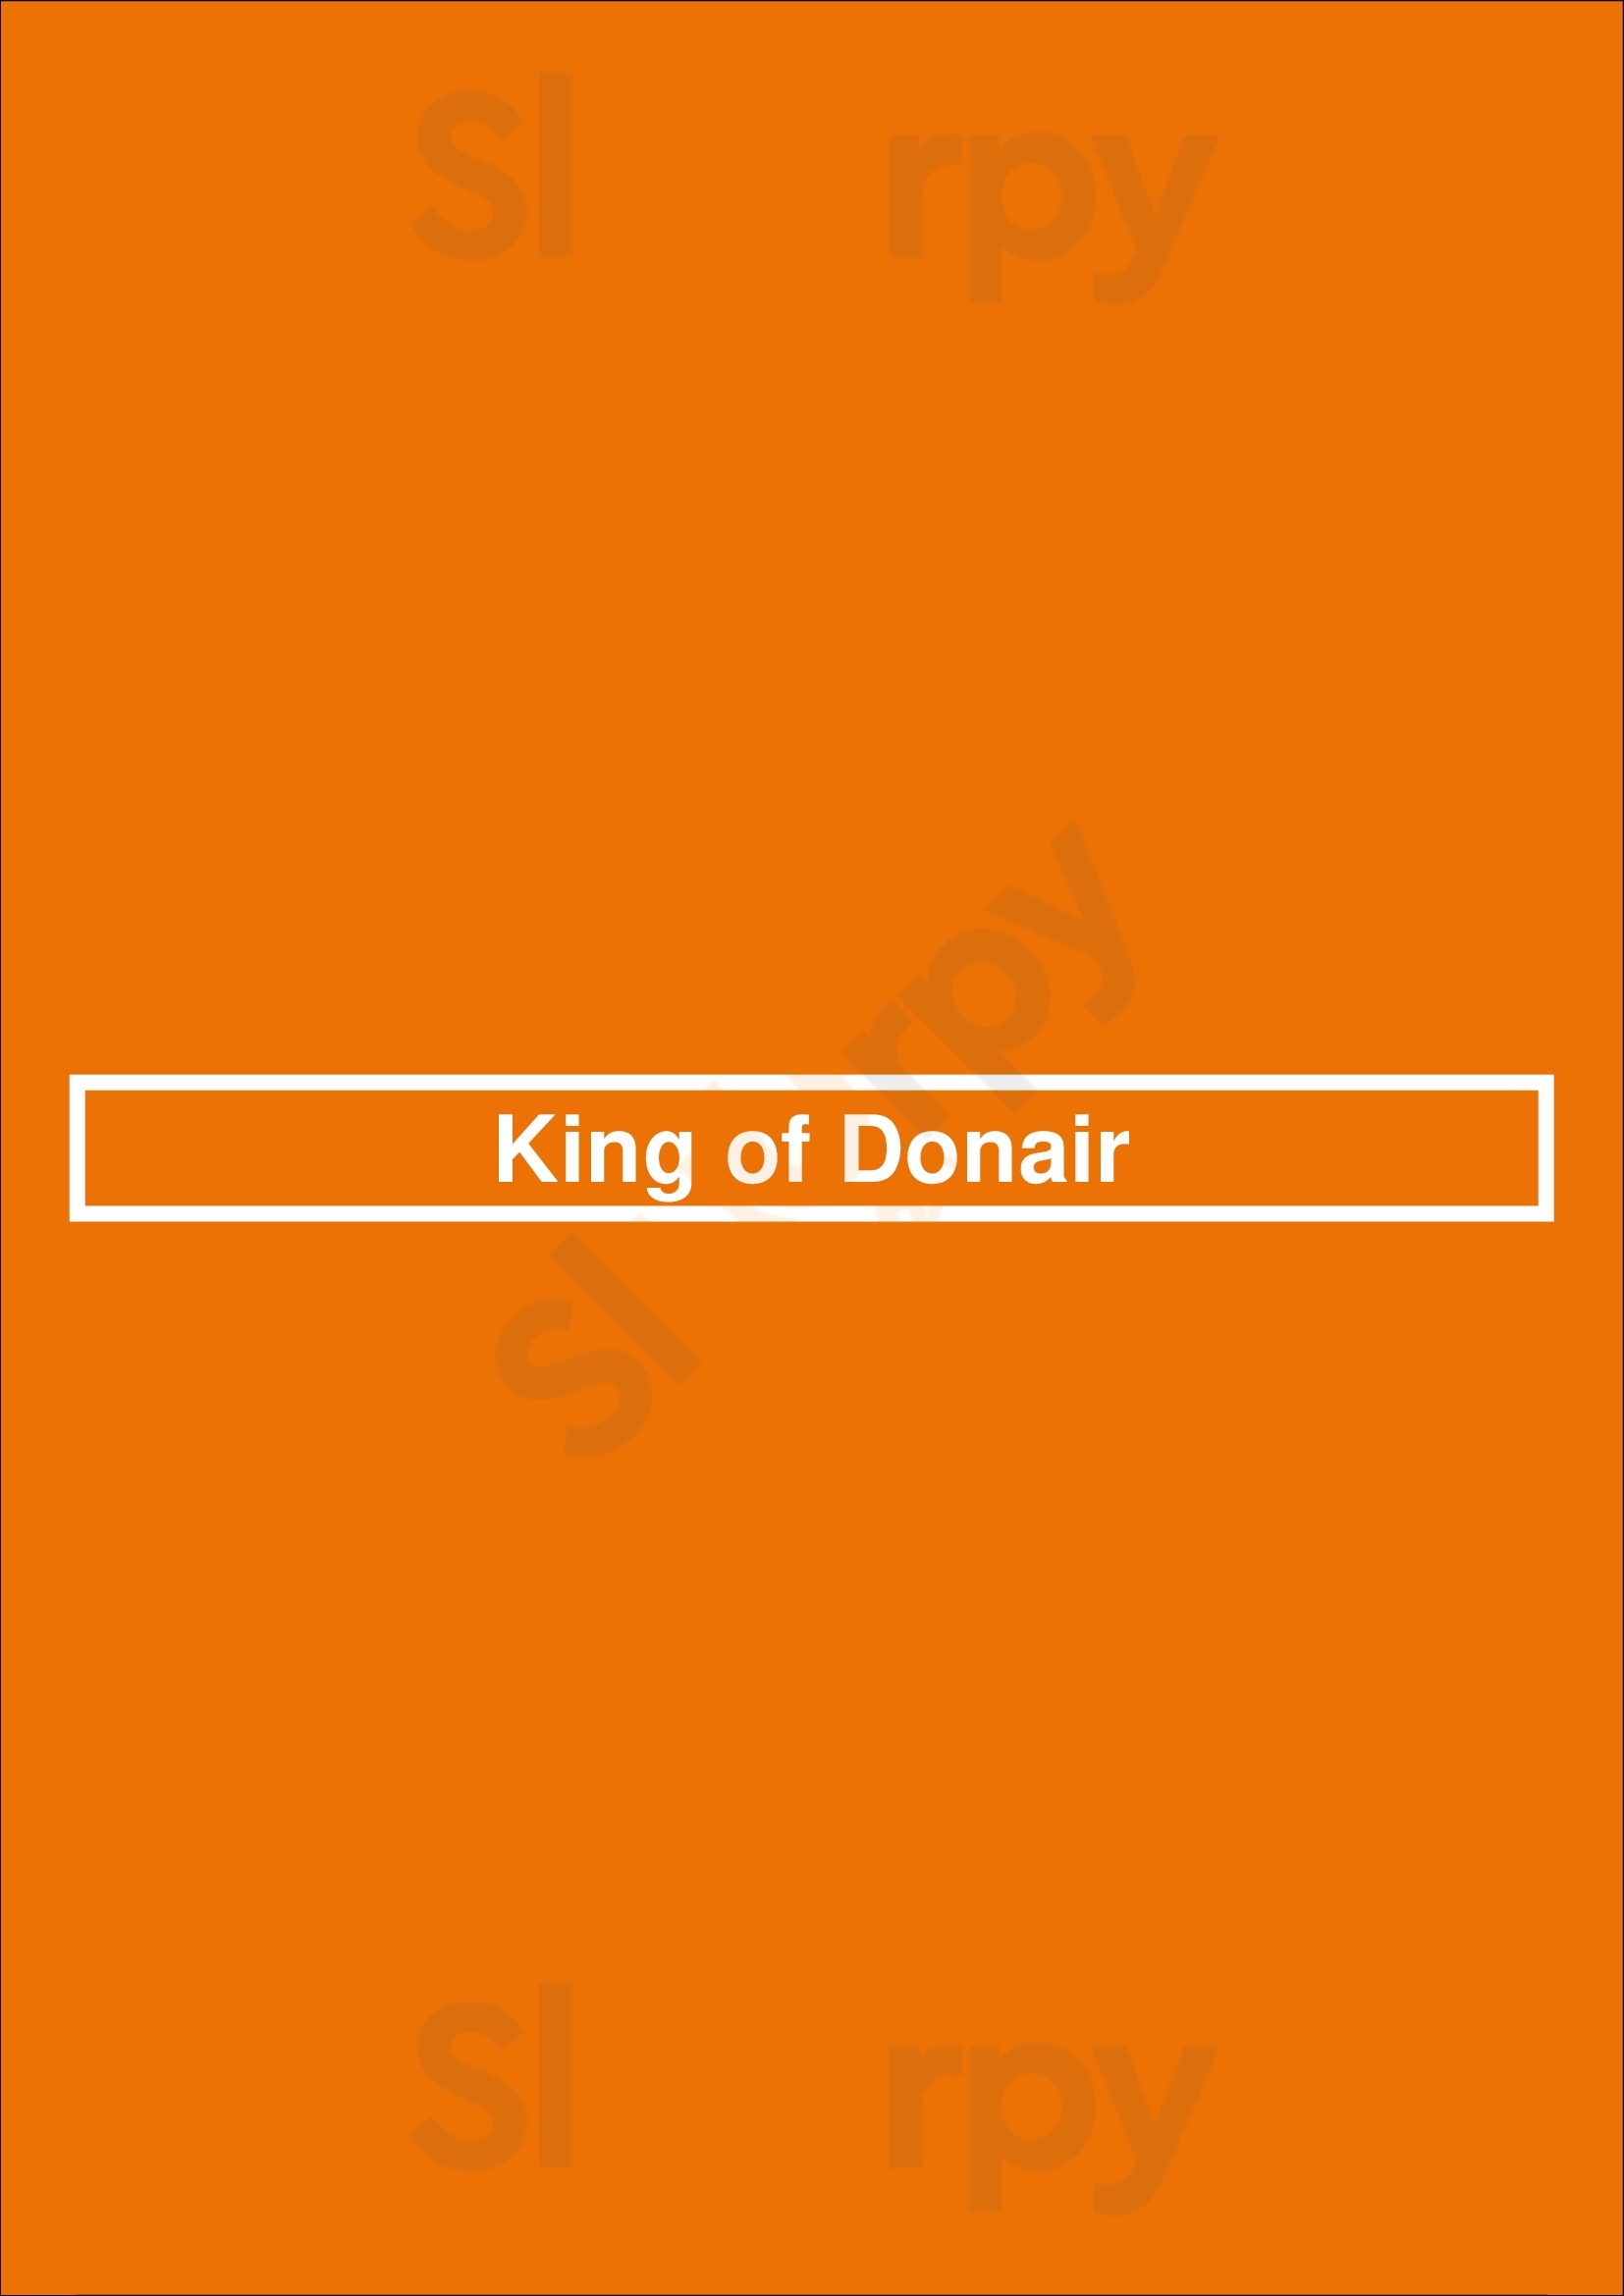 King Of Donair Halifax Menu - 1